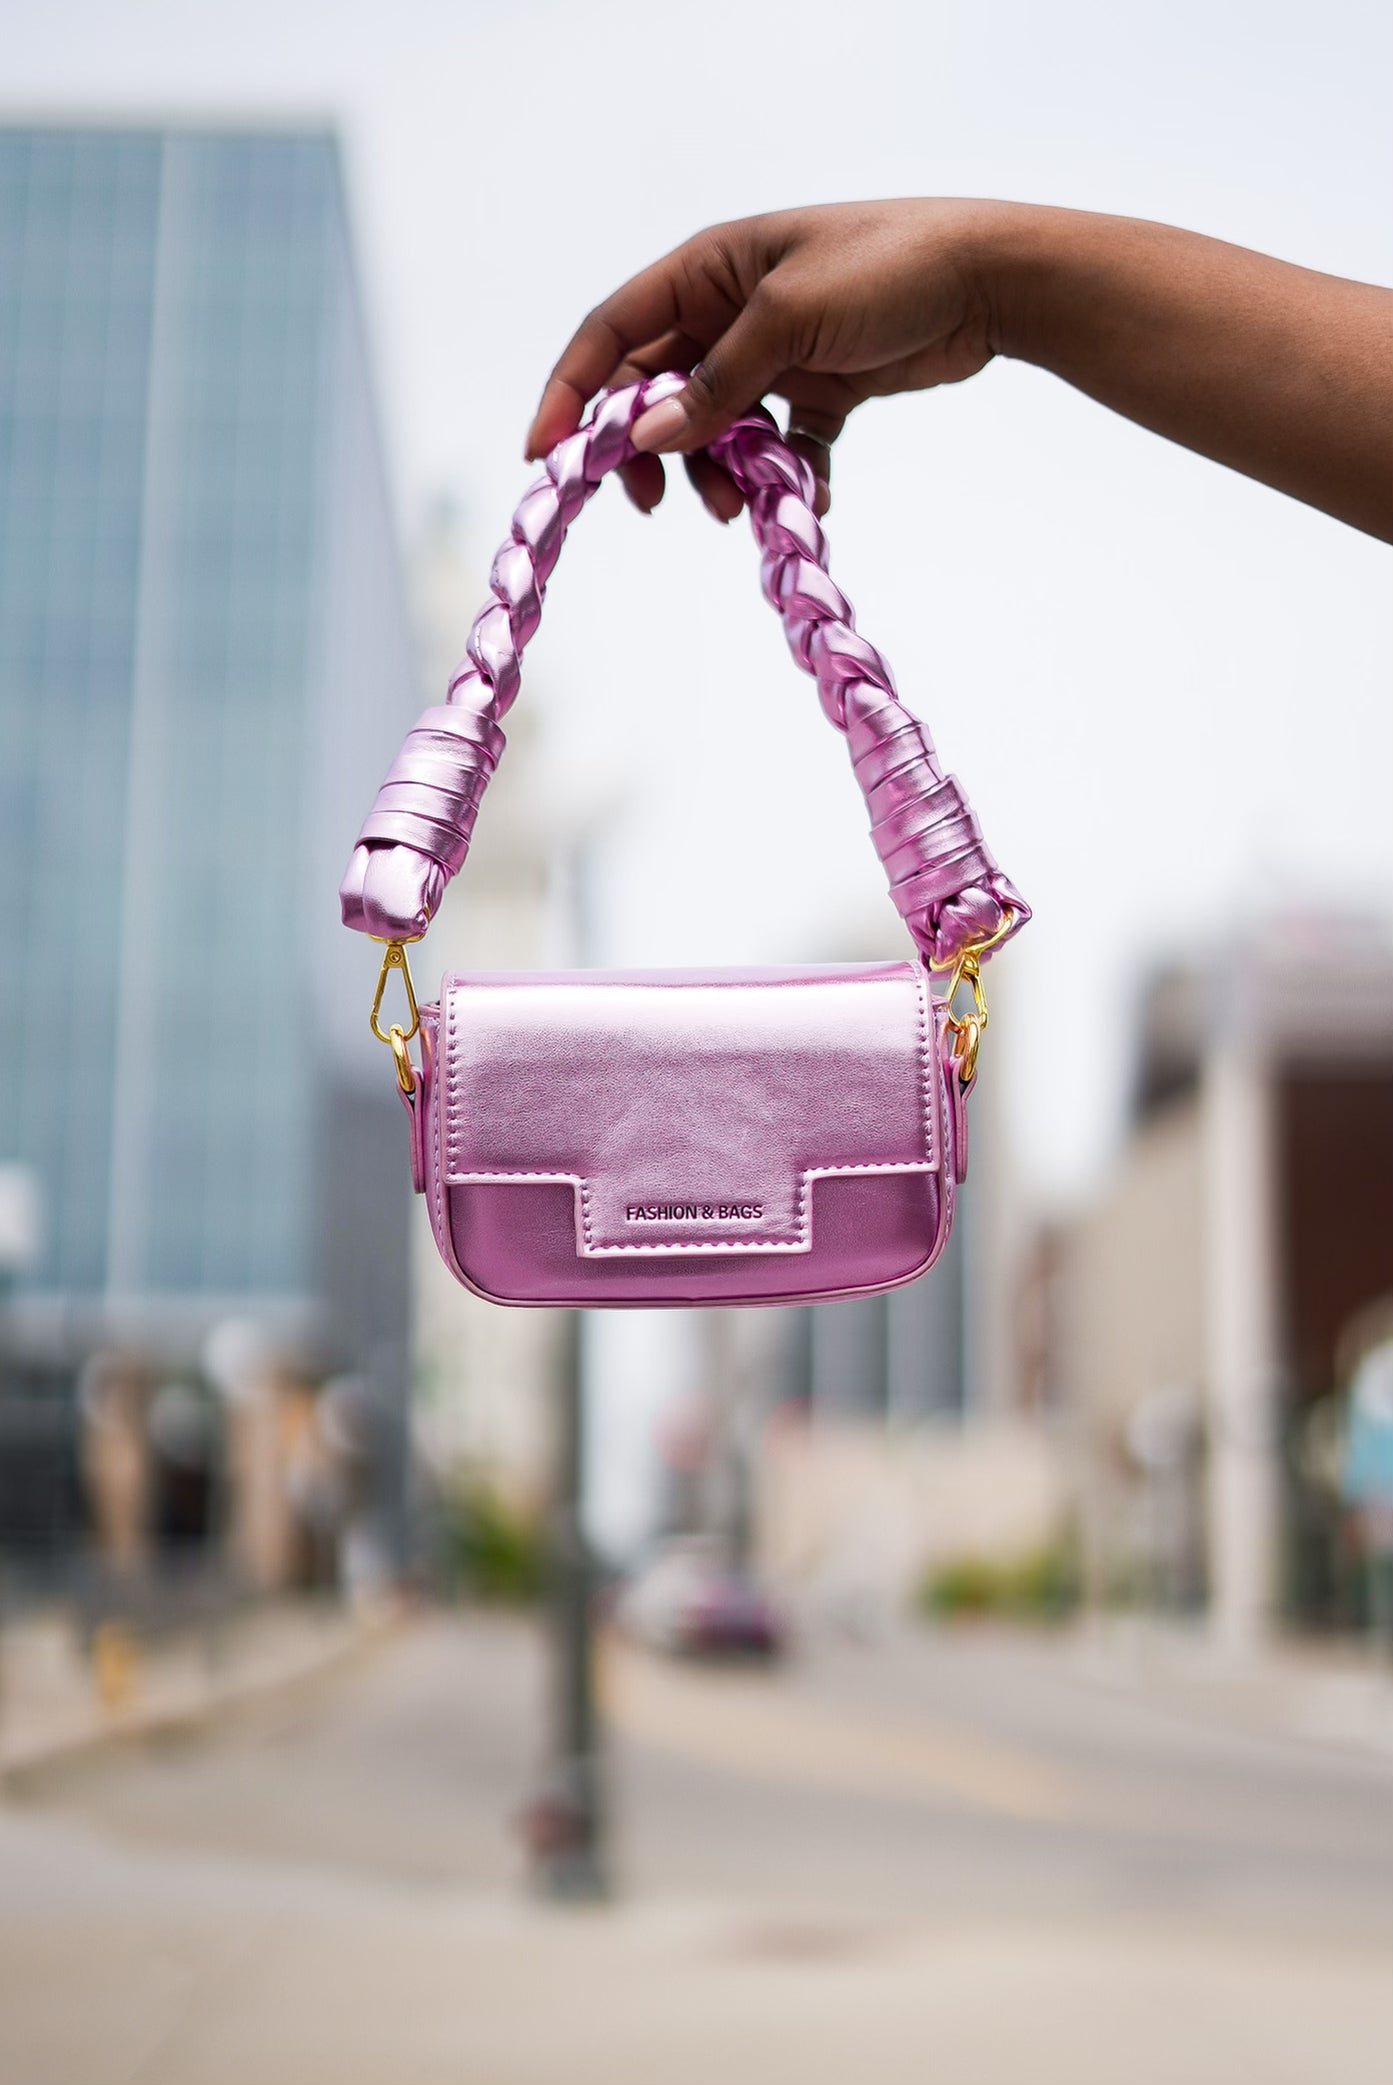 Elegant v v handbags For Stylish And Trendy Looks 